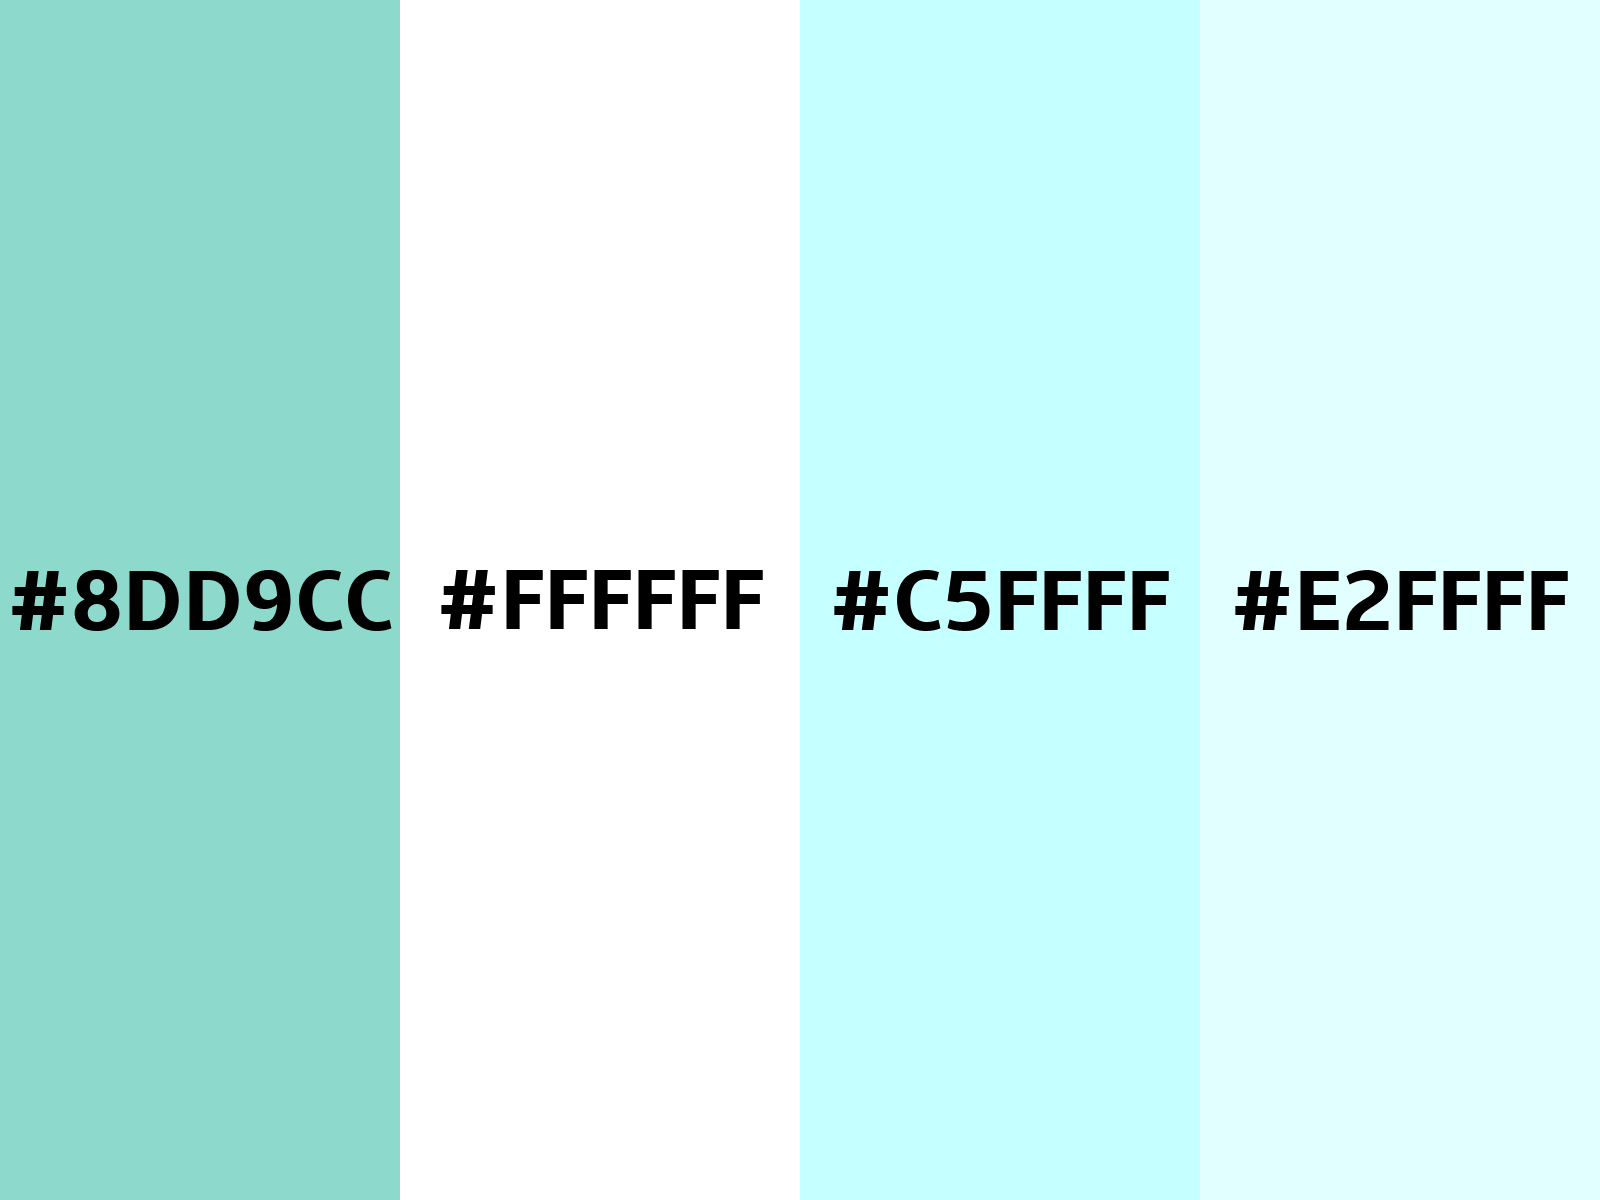 Middle blue green ( #8dd9cc ) - plain background image